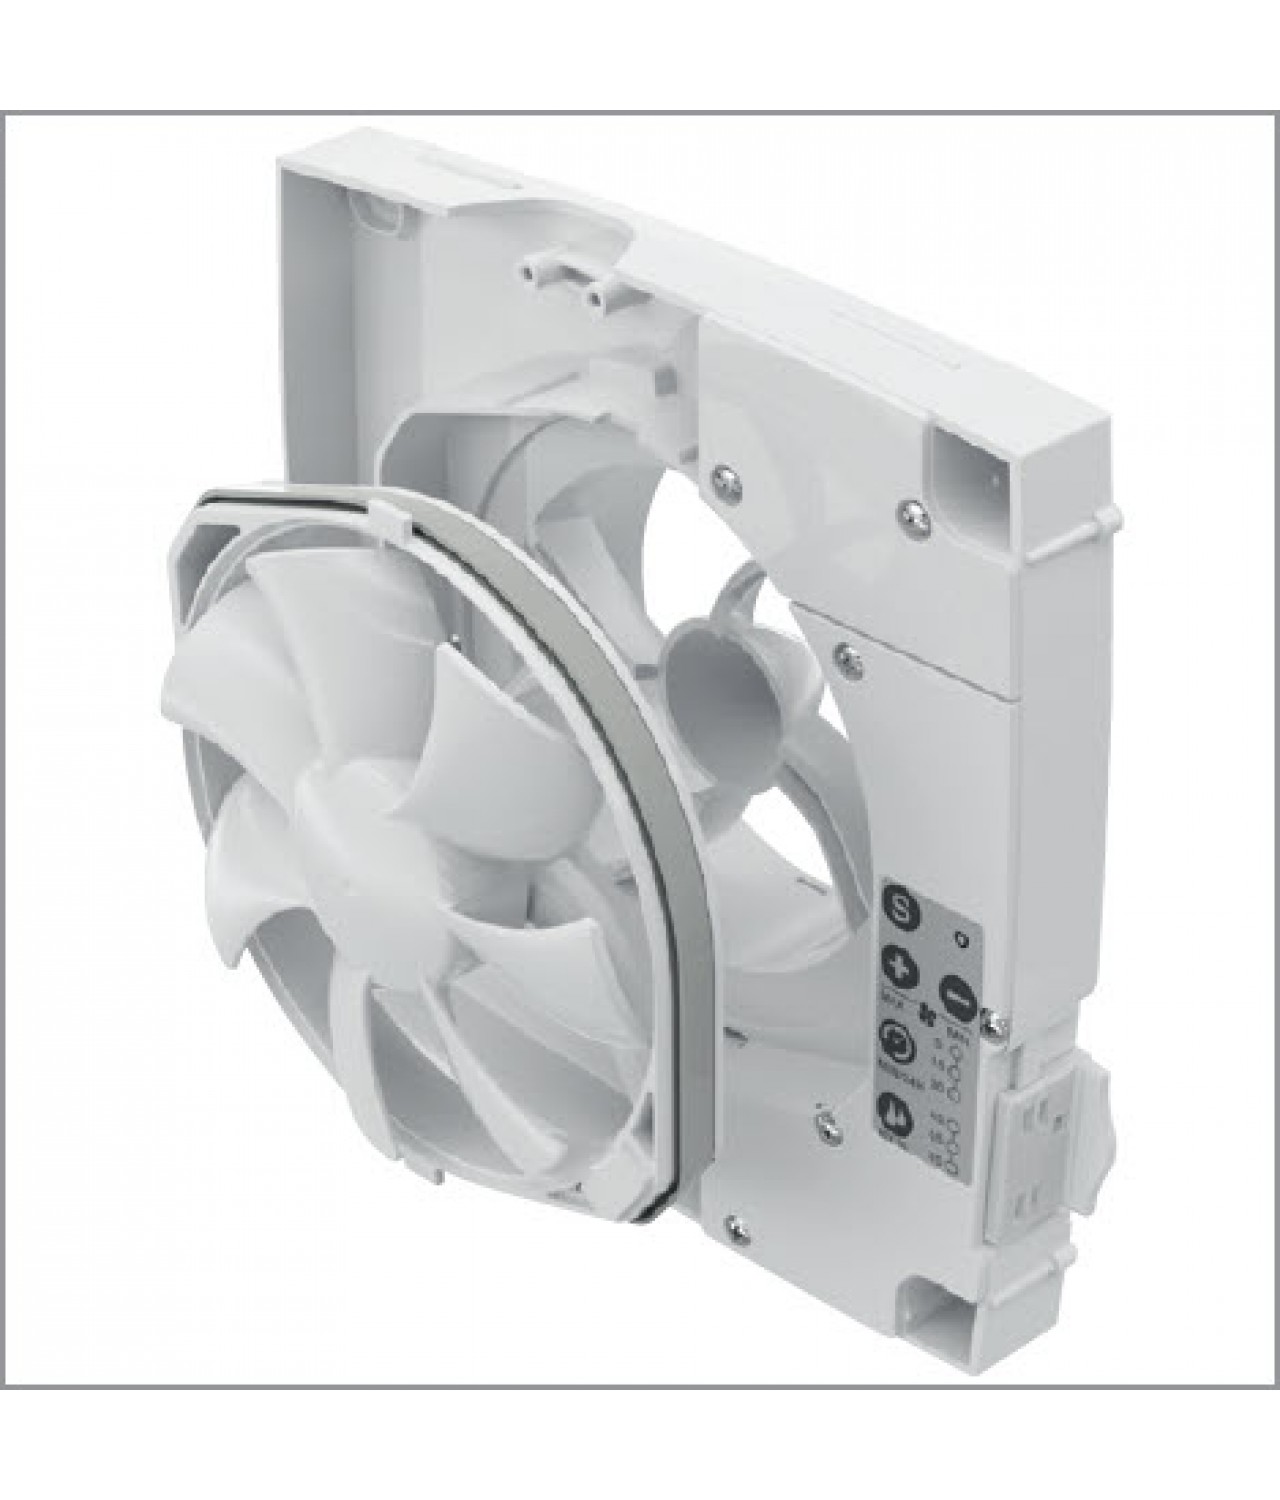 @max bathroom fan impeller easily removable